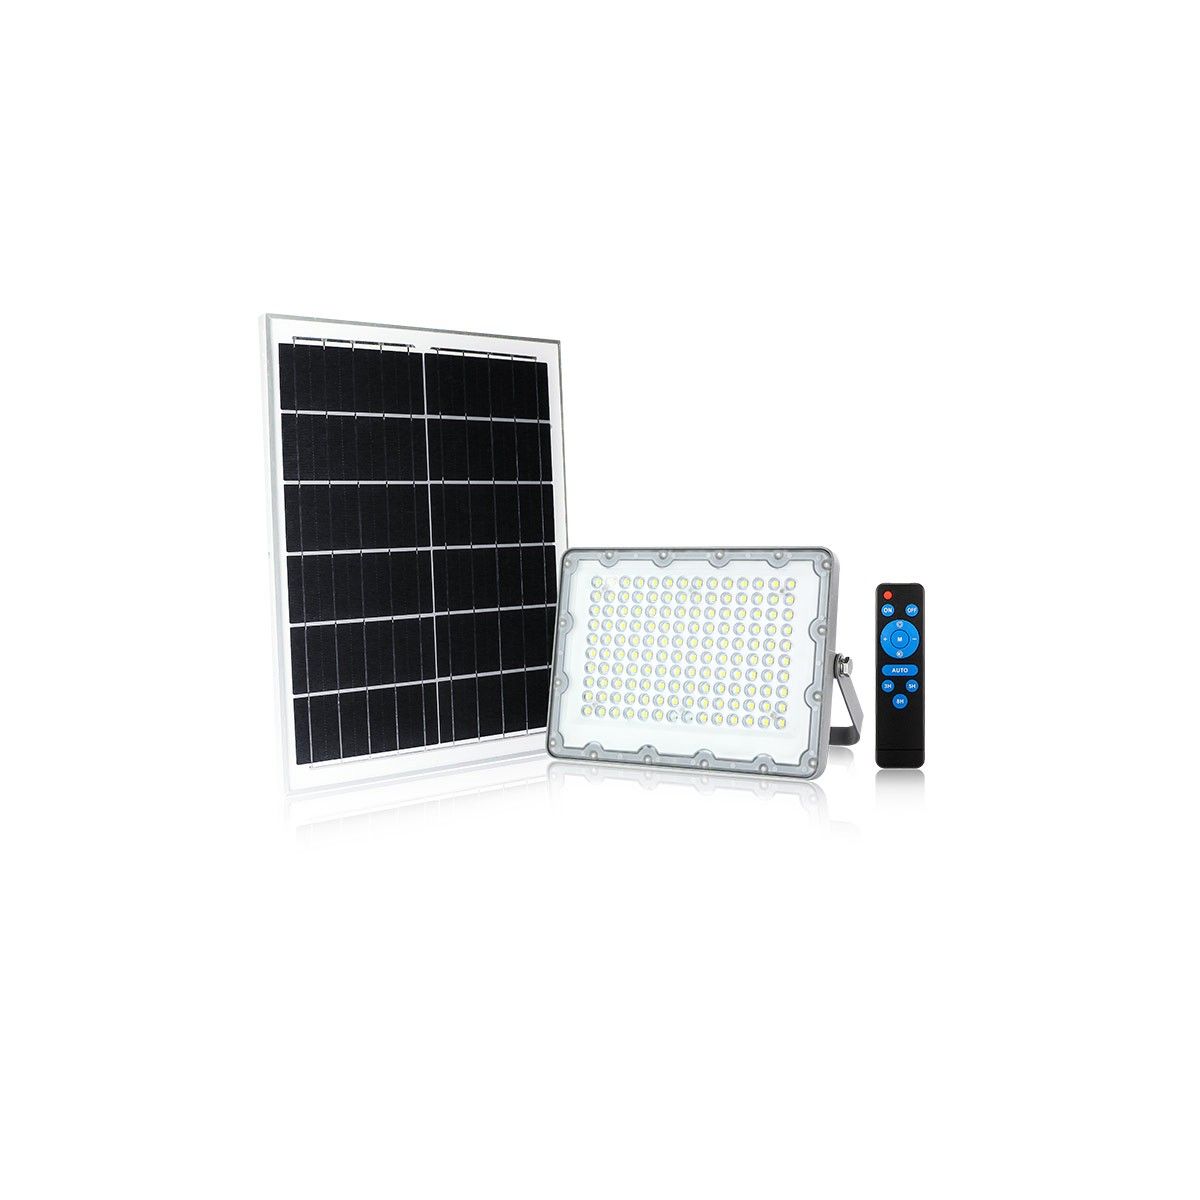 Proyector LED solar